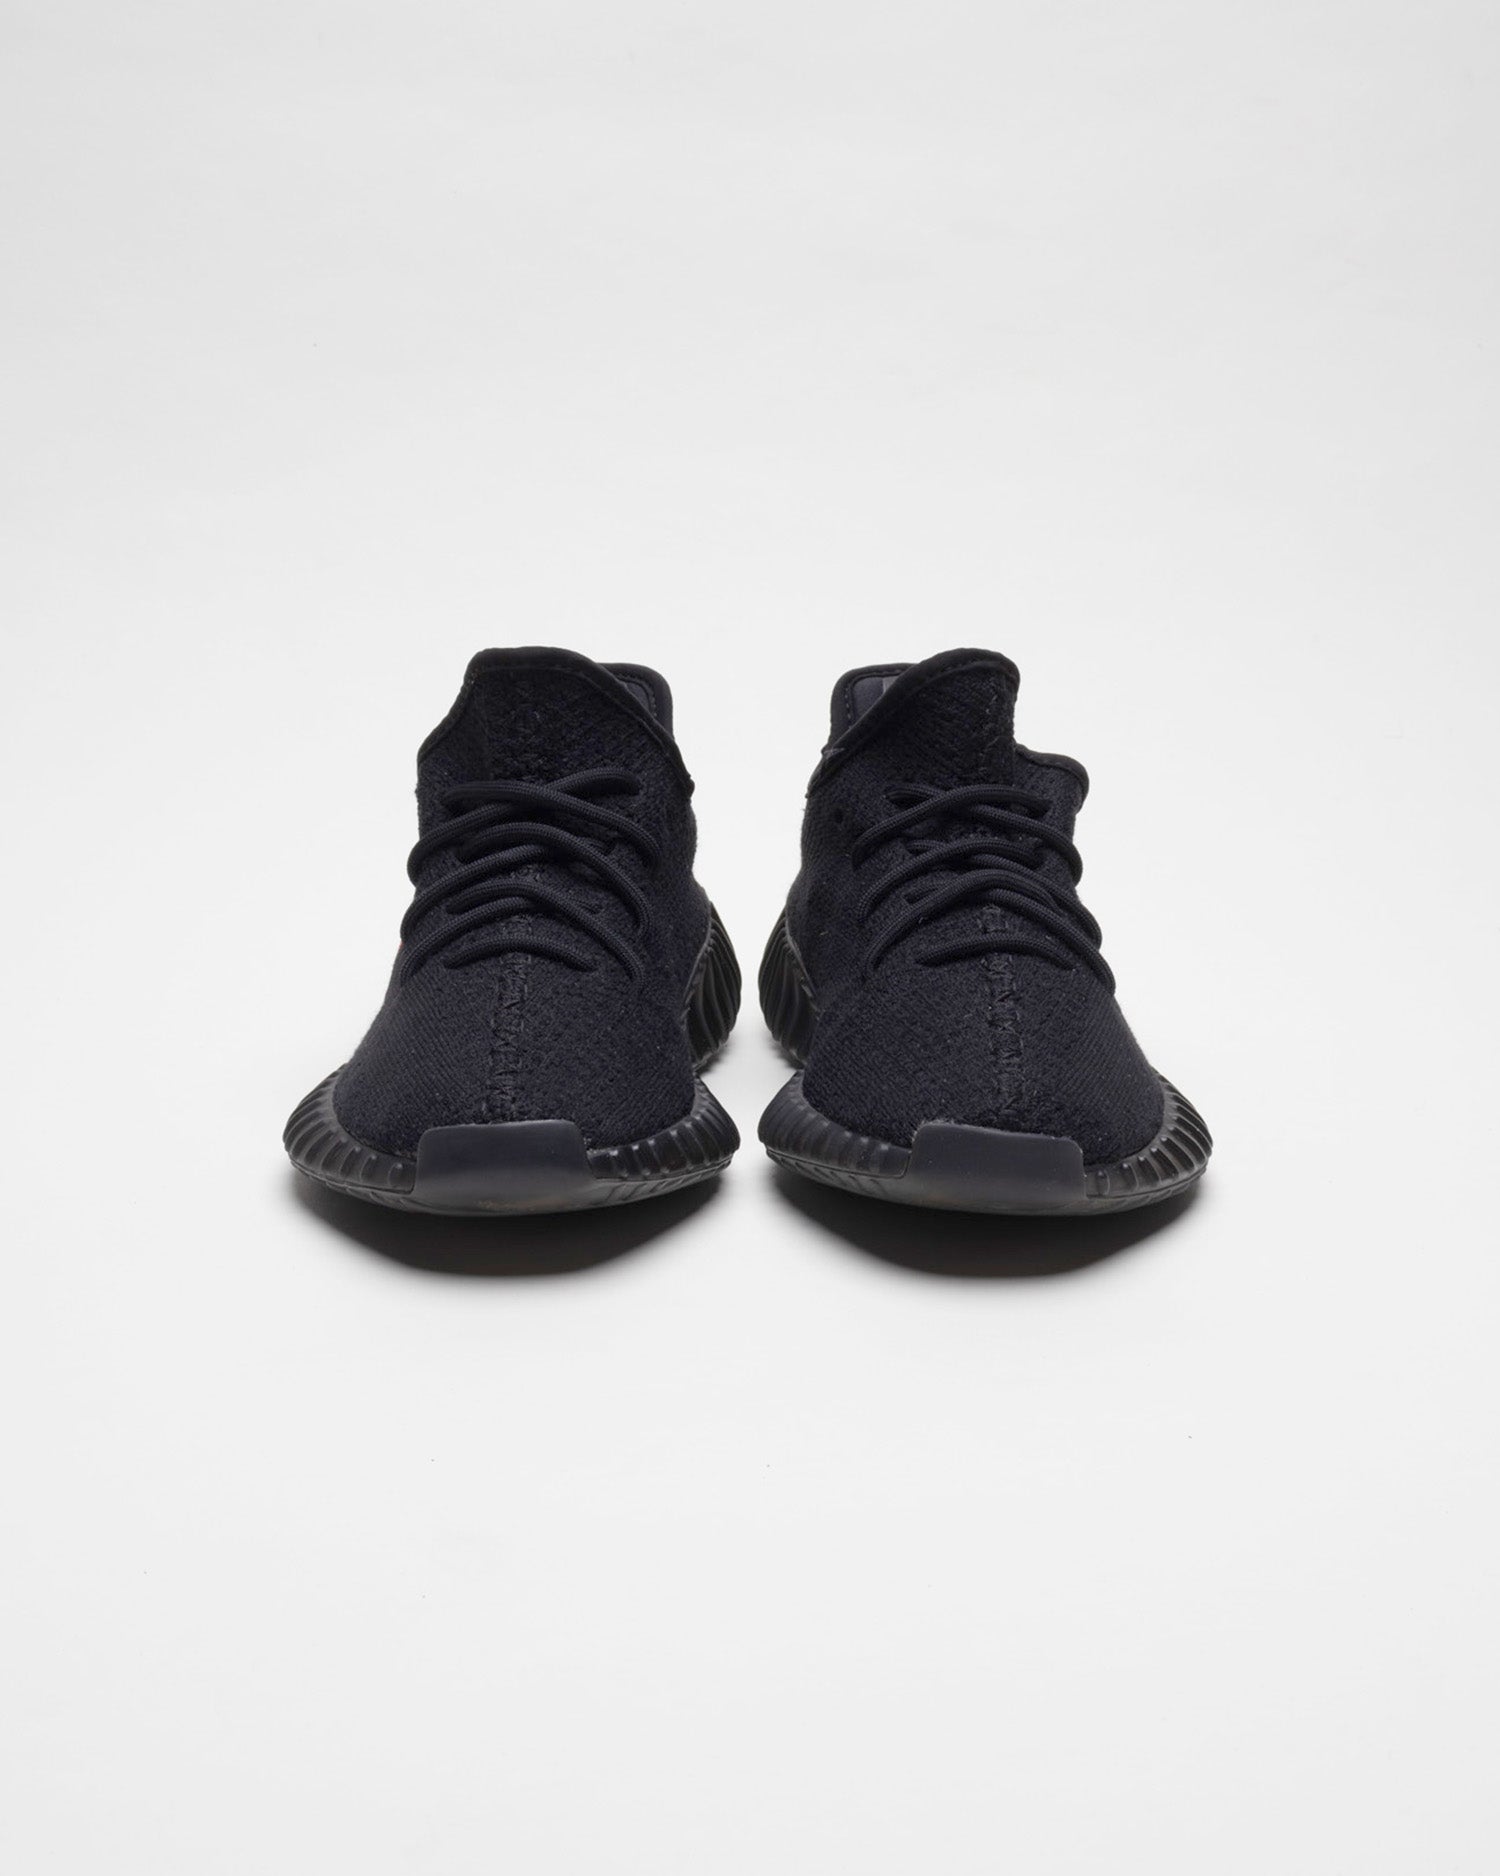 Adidas Yeezy Boost 350 V2 Sneaker Black Red